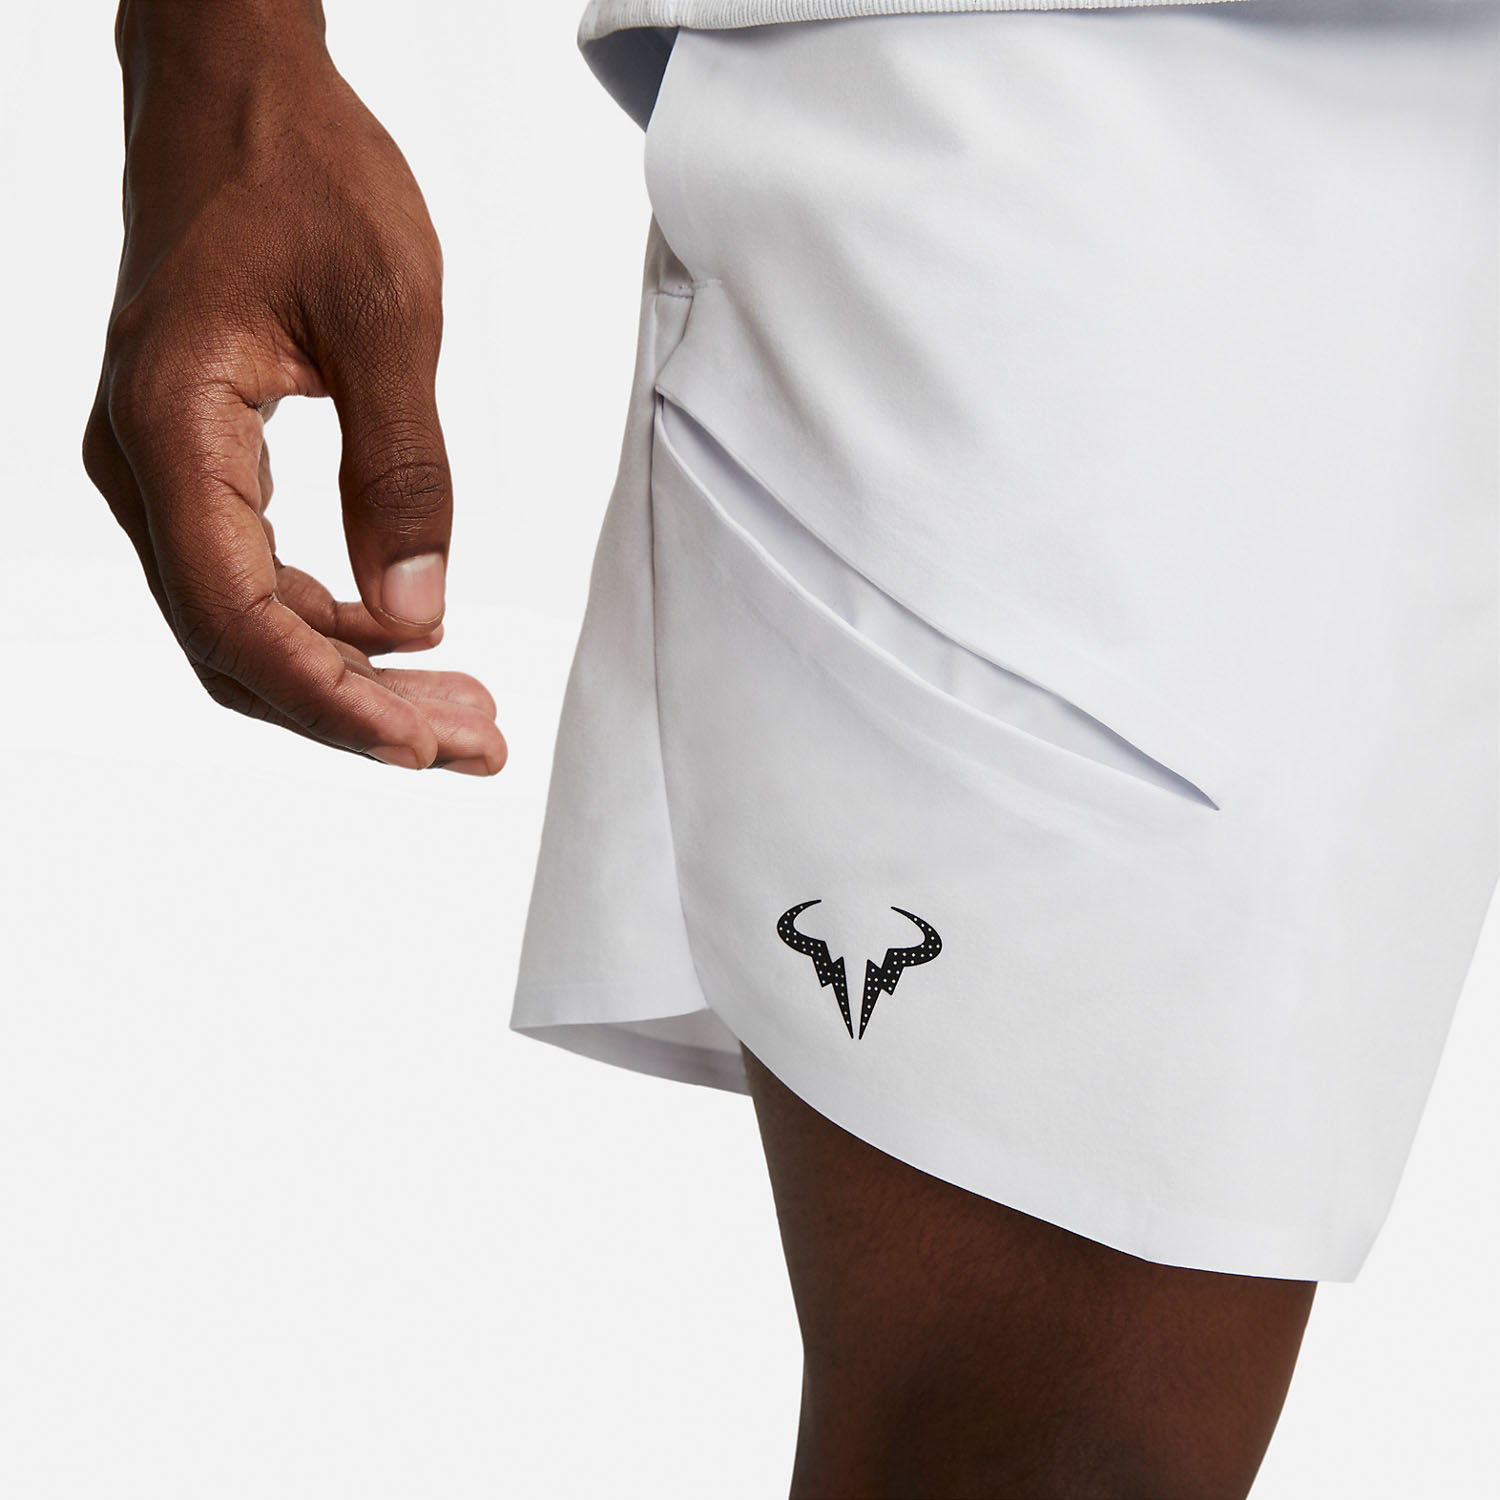 Nike Men's NikeCourt Dri-FIT Advantage 7 Tennis Shorts $ 62